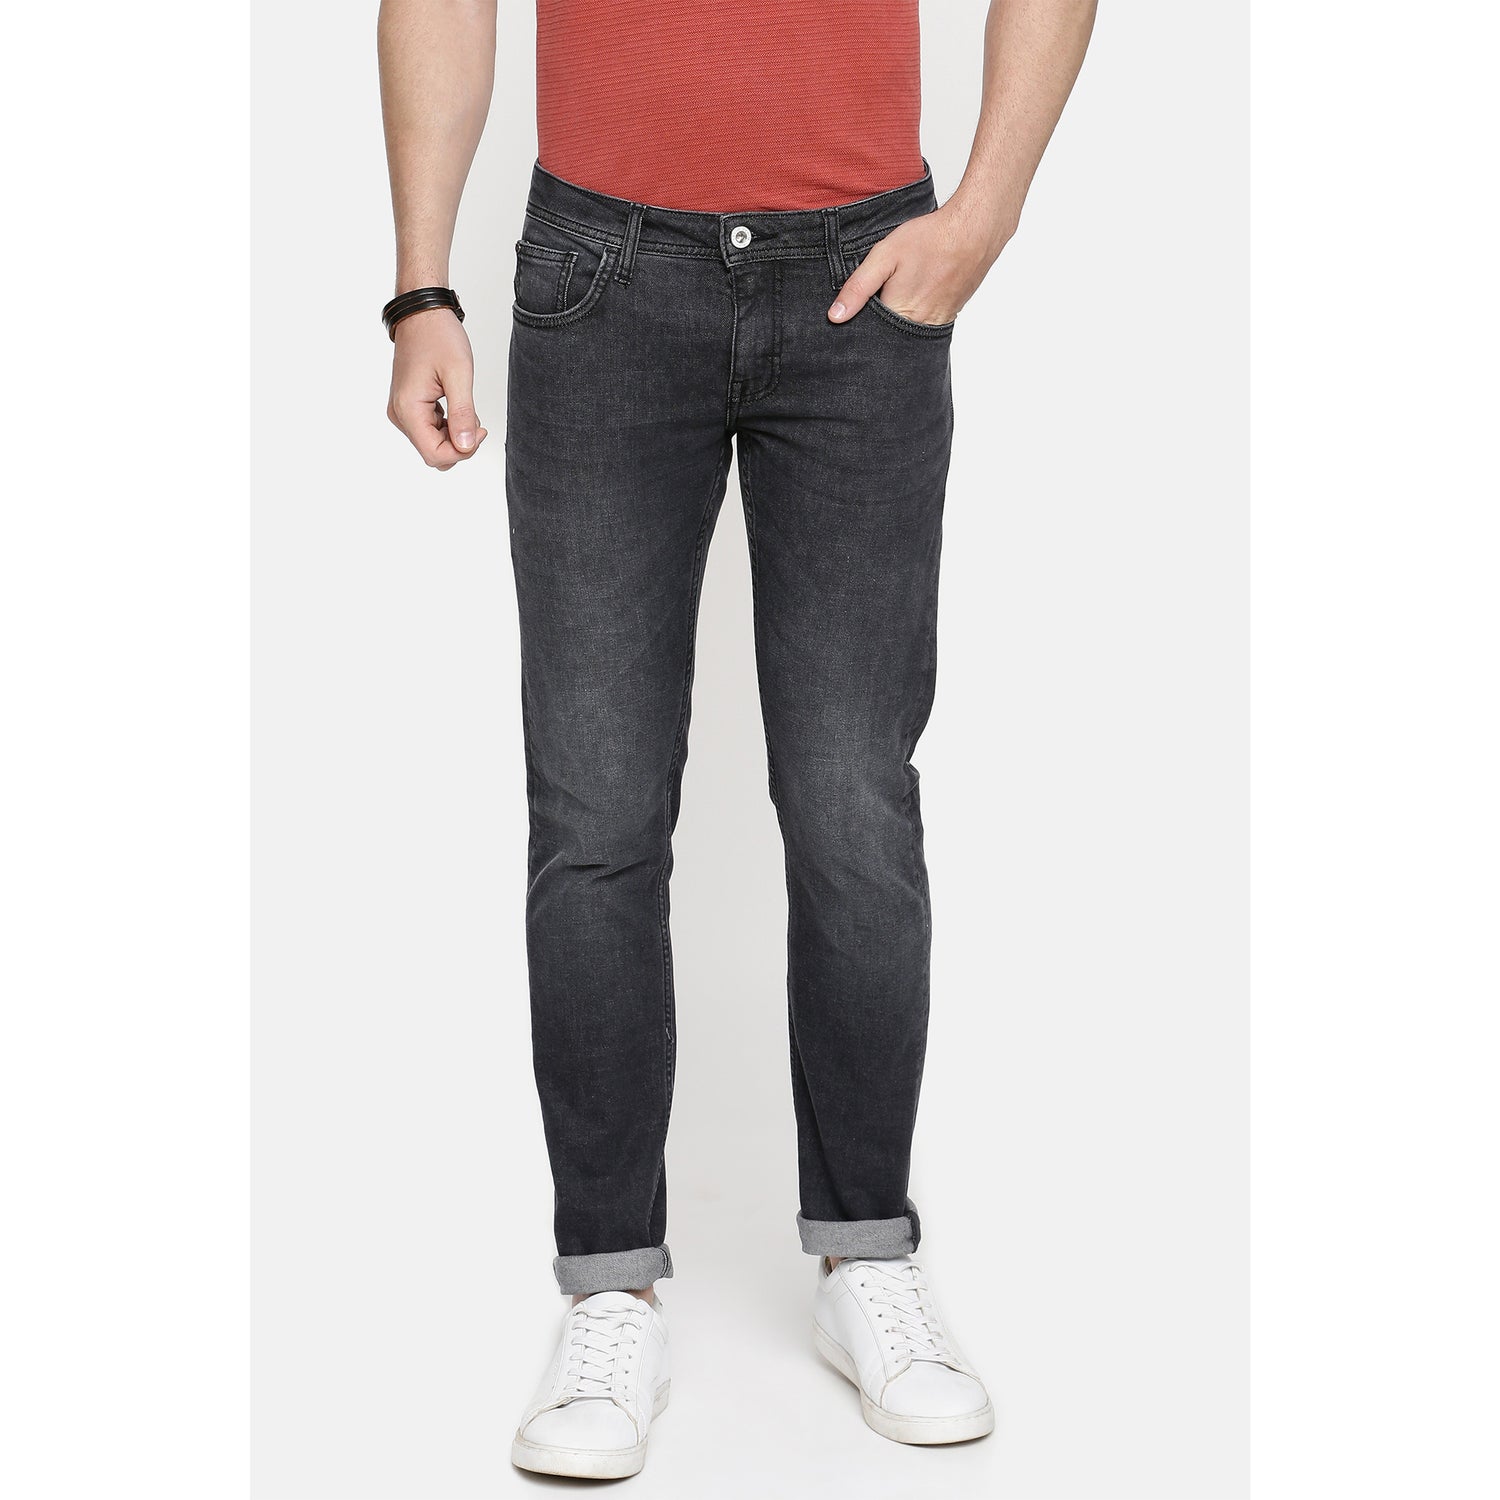 Men's Grey Cotton Blend Solid Slim Jeans (POSLEY45I)